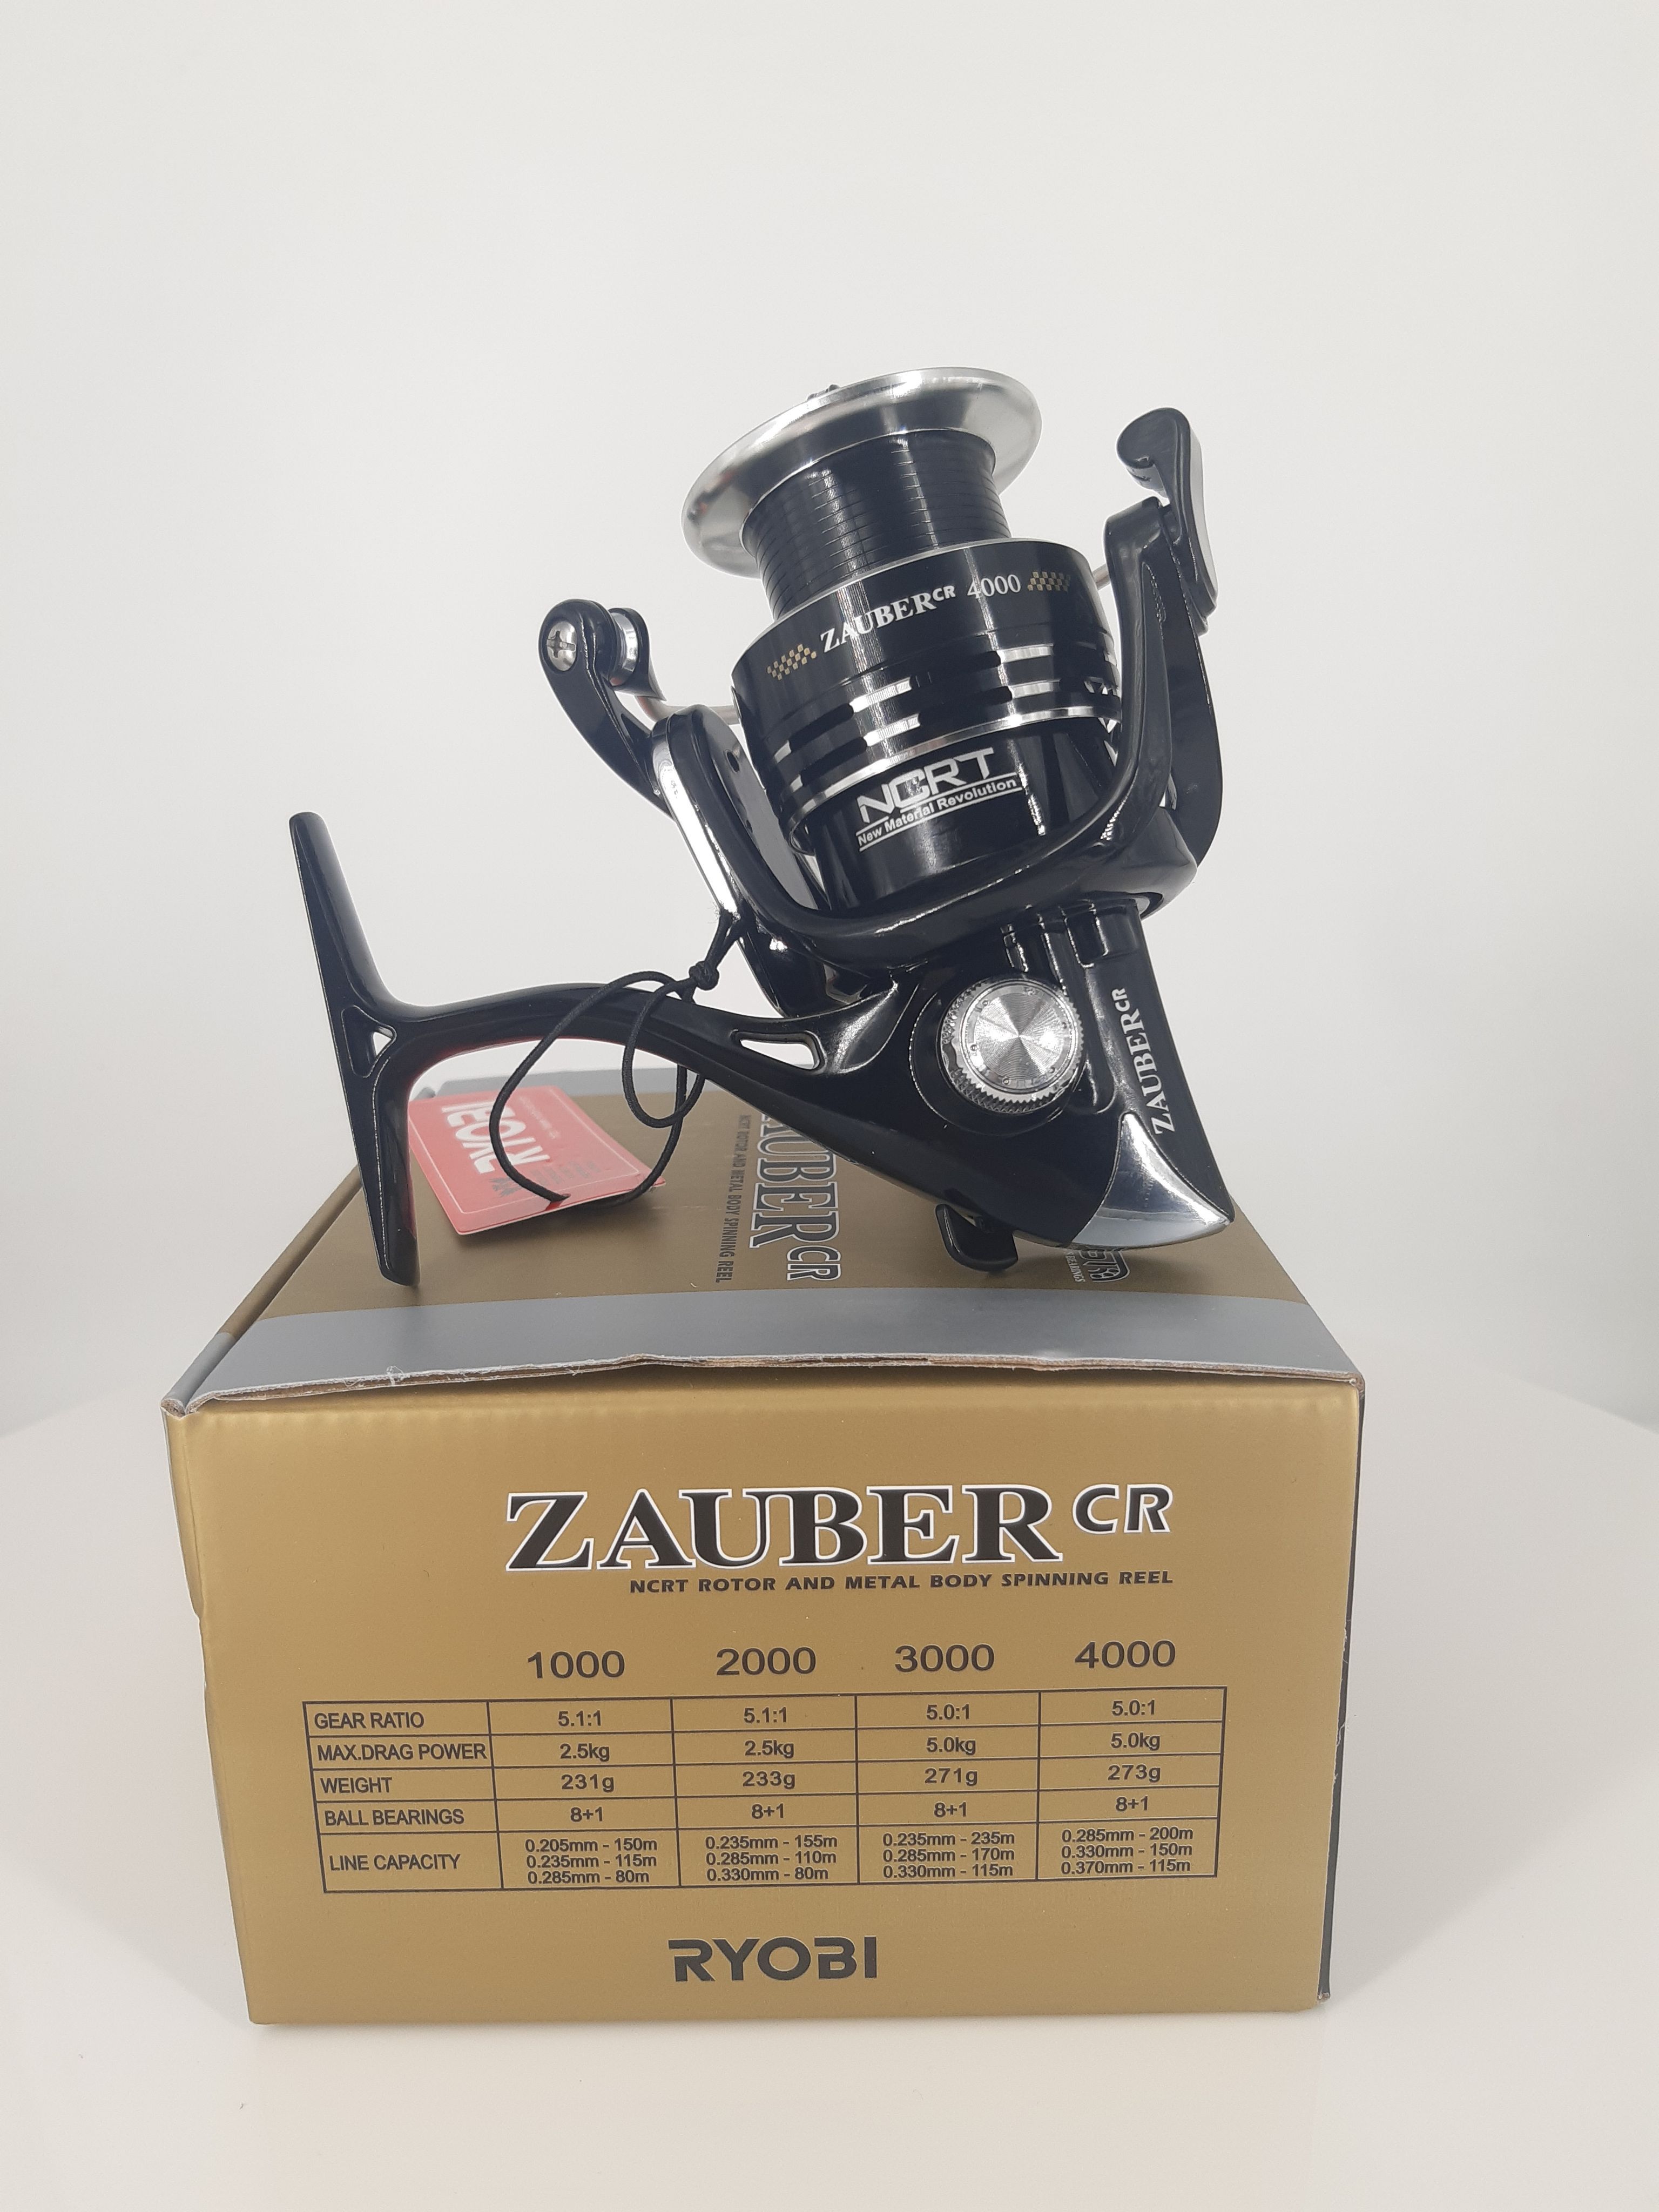 Ryobi Zauber CR 2000 - характеристики и обзор модели